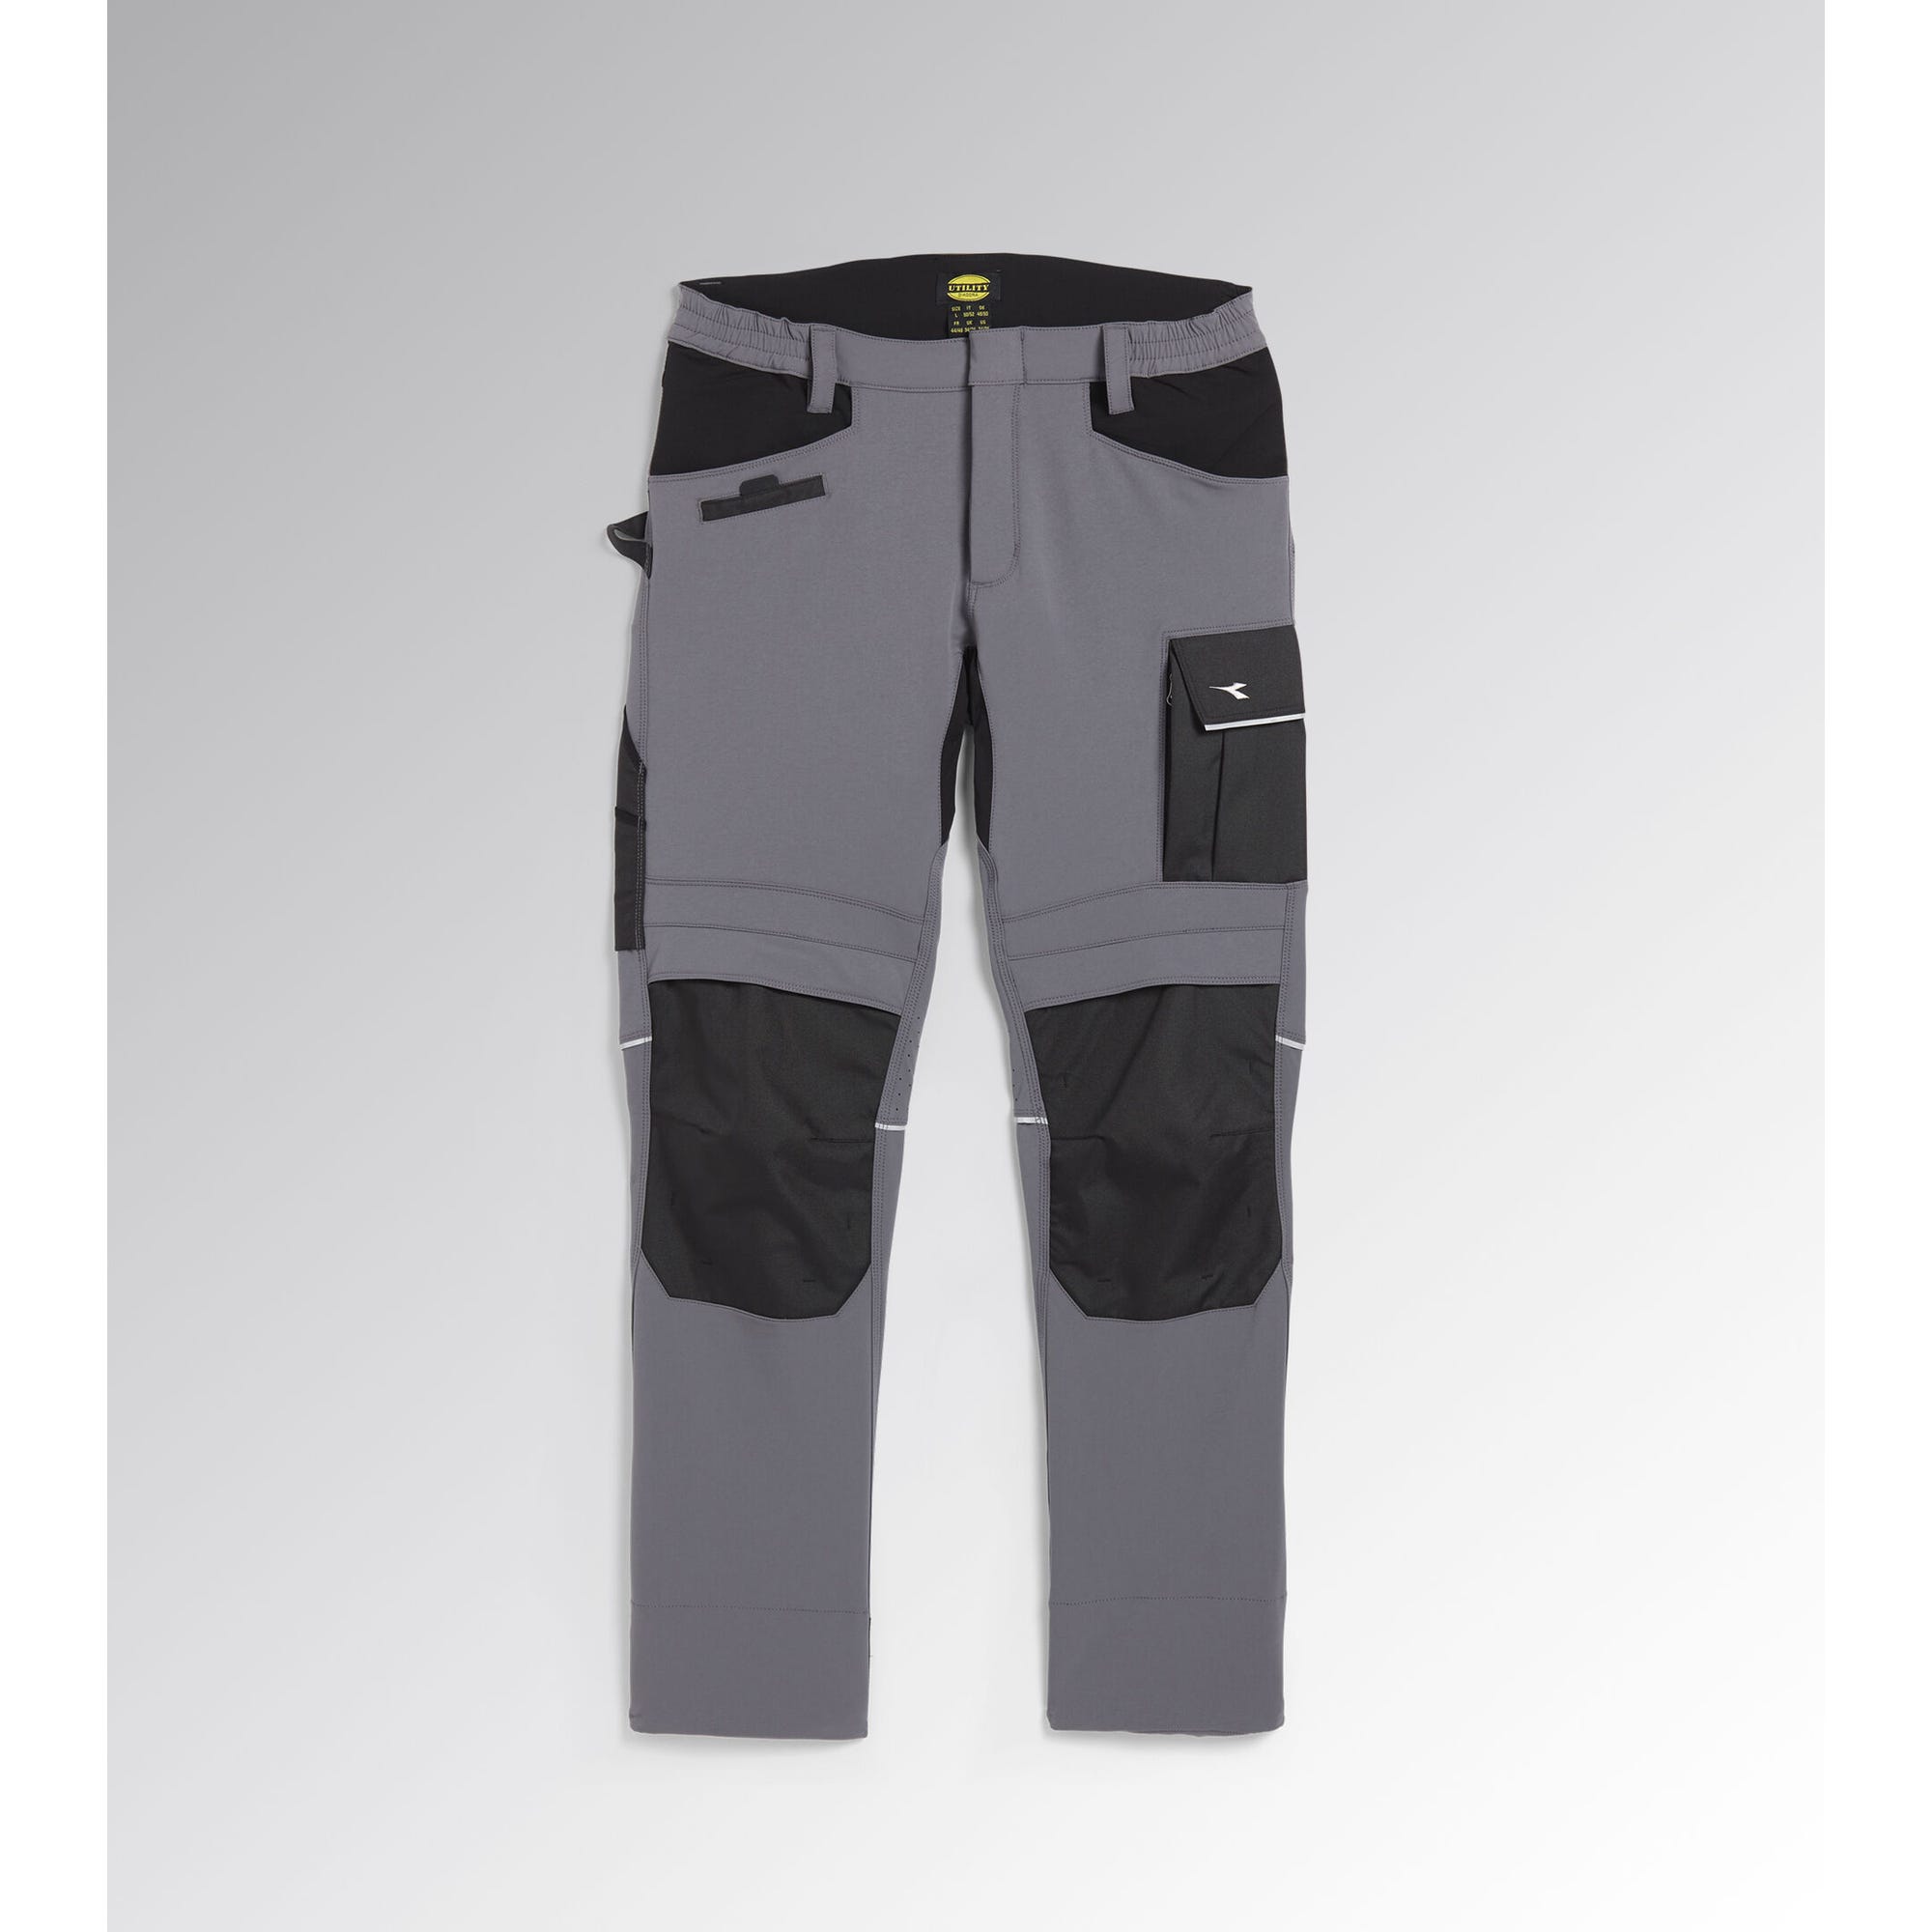 Pantalon de travail Stretch carbon performance DIADORA Gris S 3